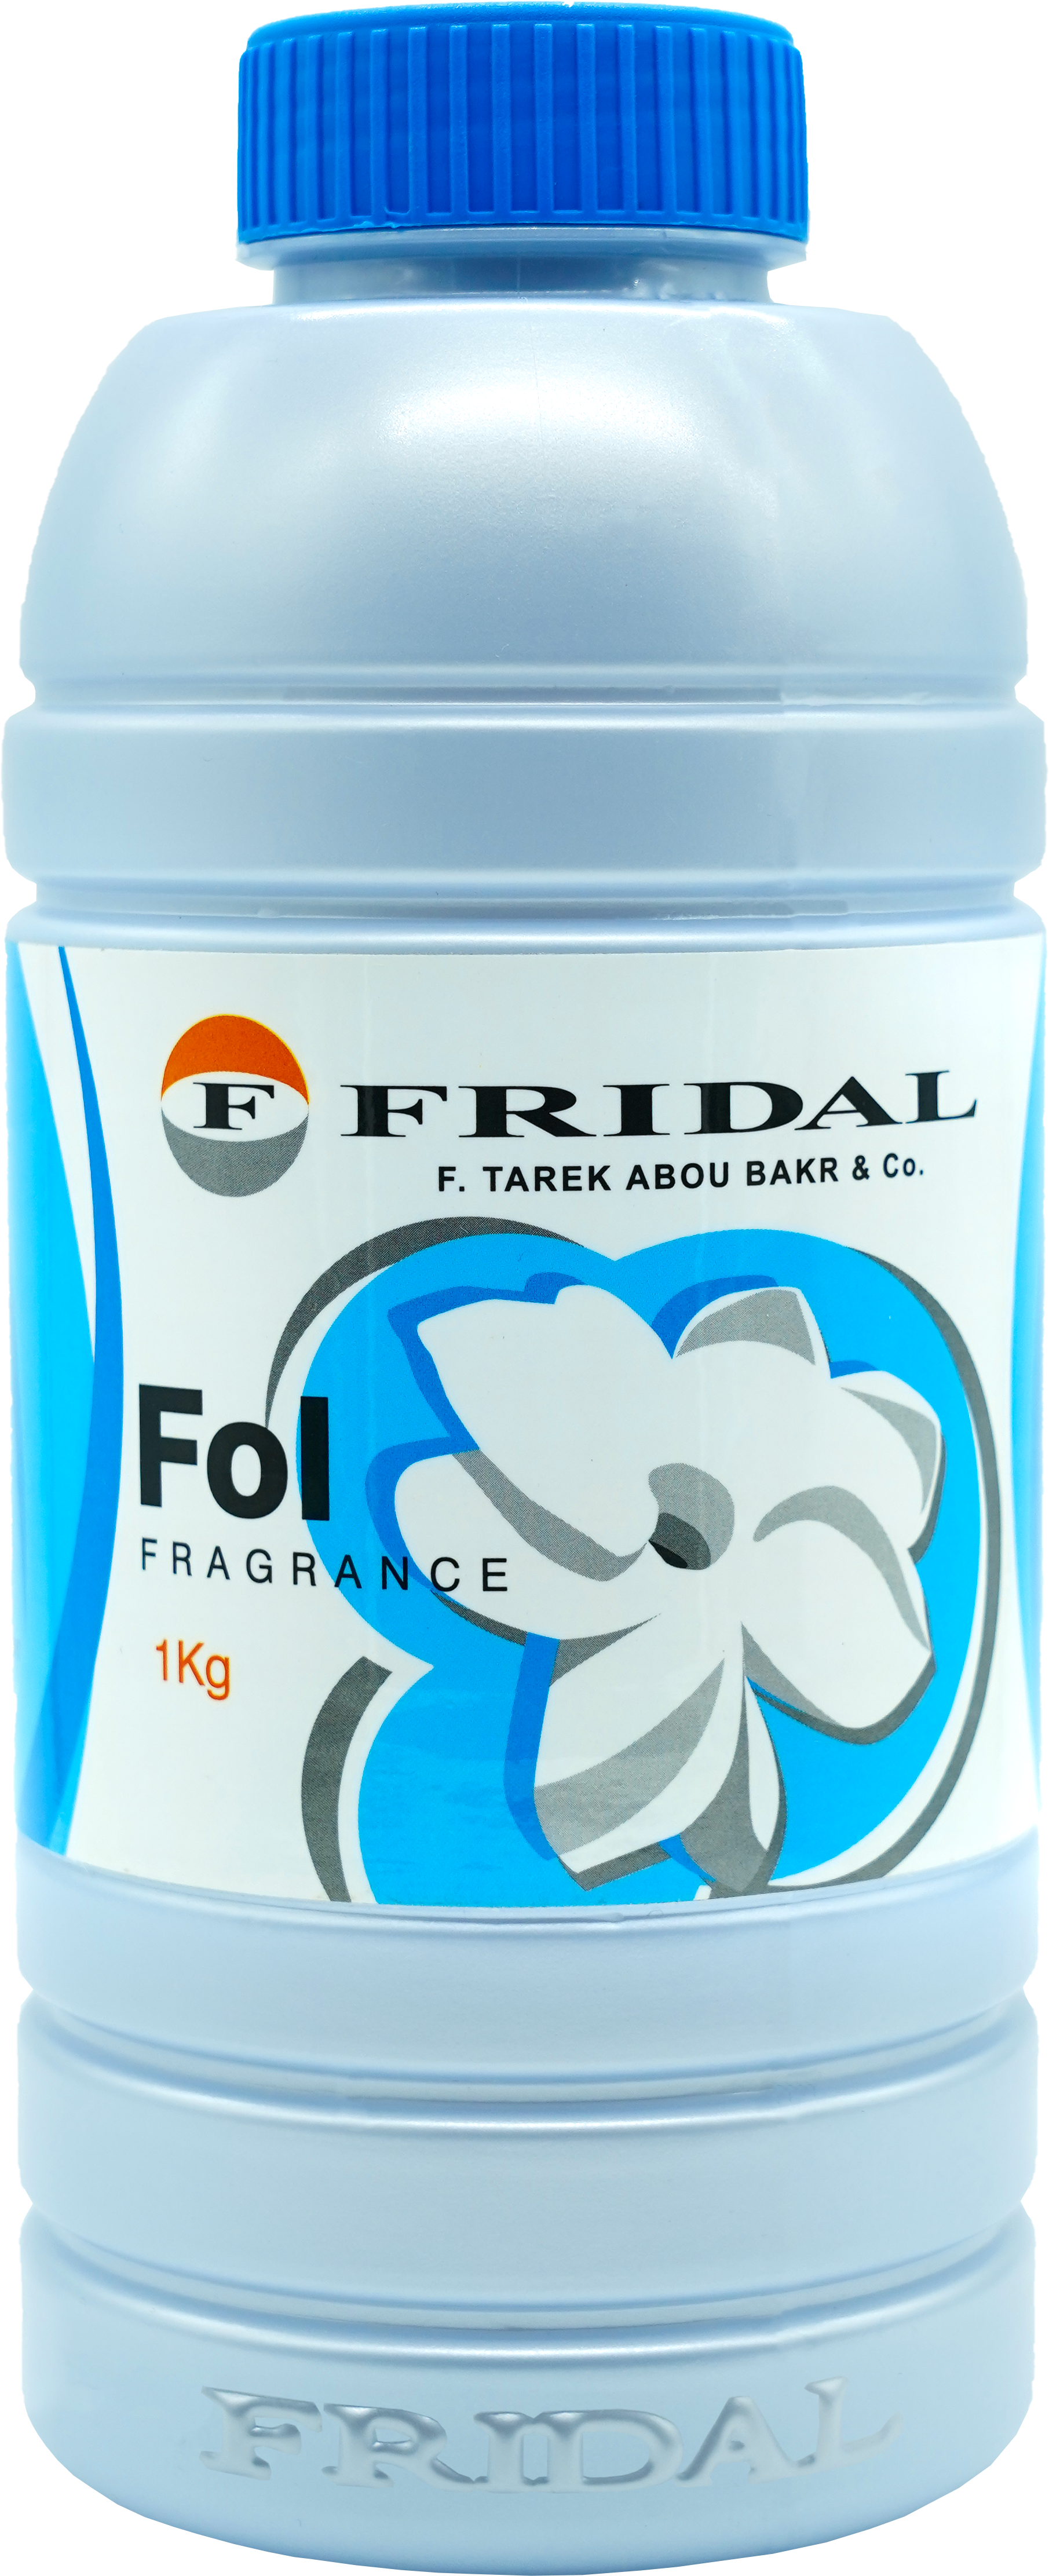 Multi-purpose usage Fragrance "Fol 1kg"